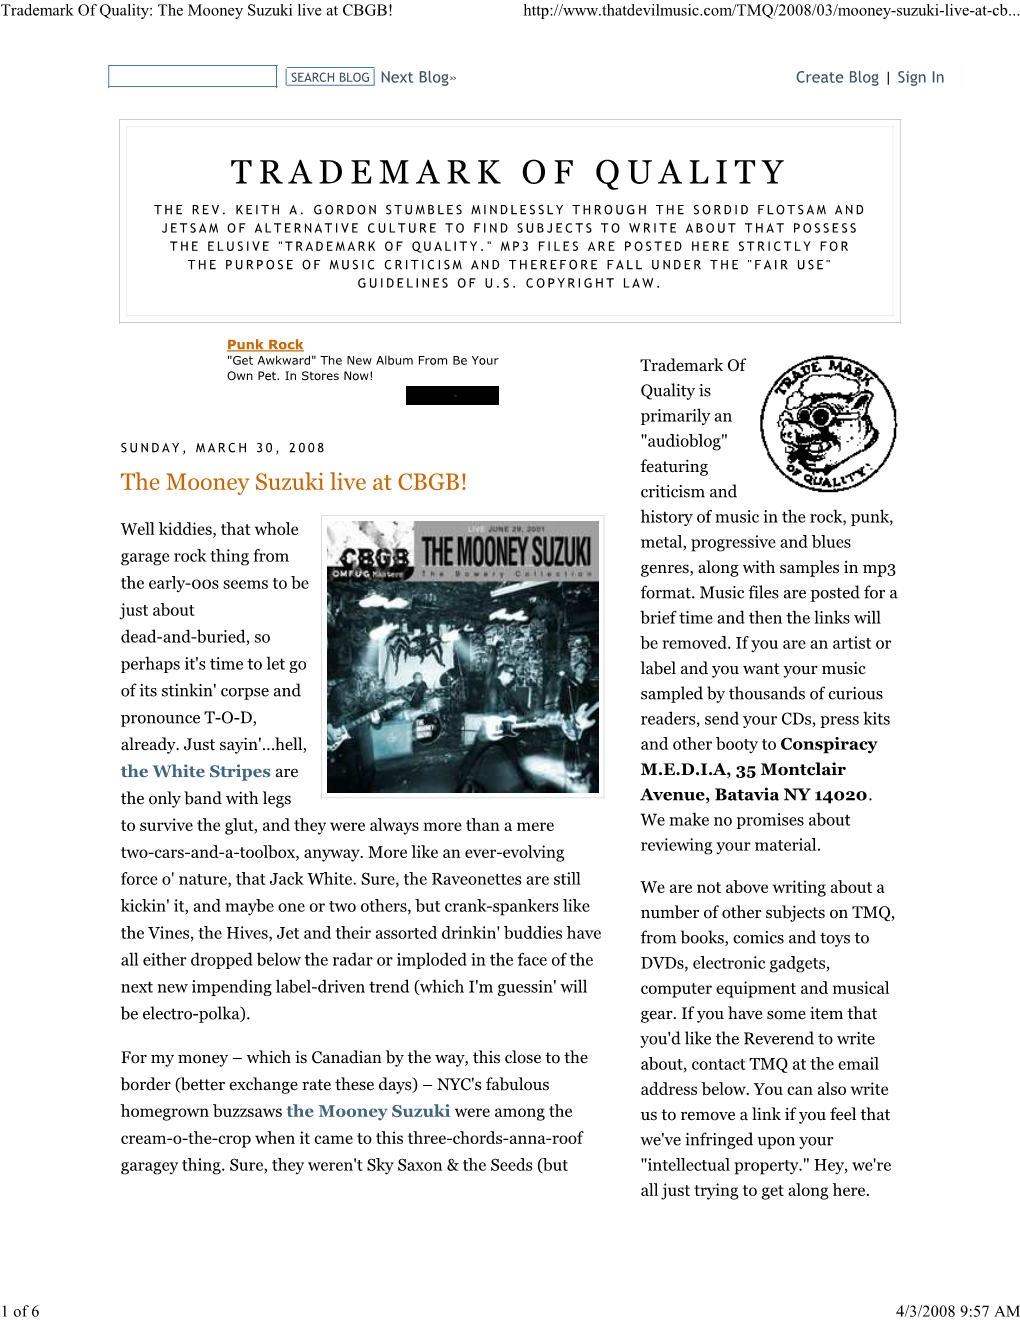 Trademark of Quality: the Mooney Suzuki Live at CBGB!